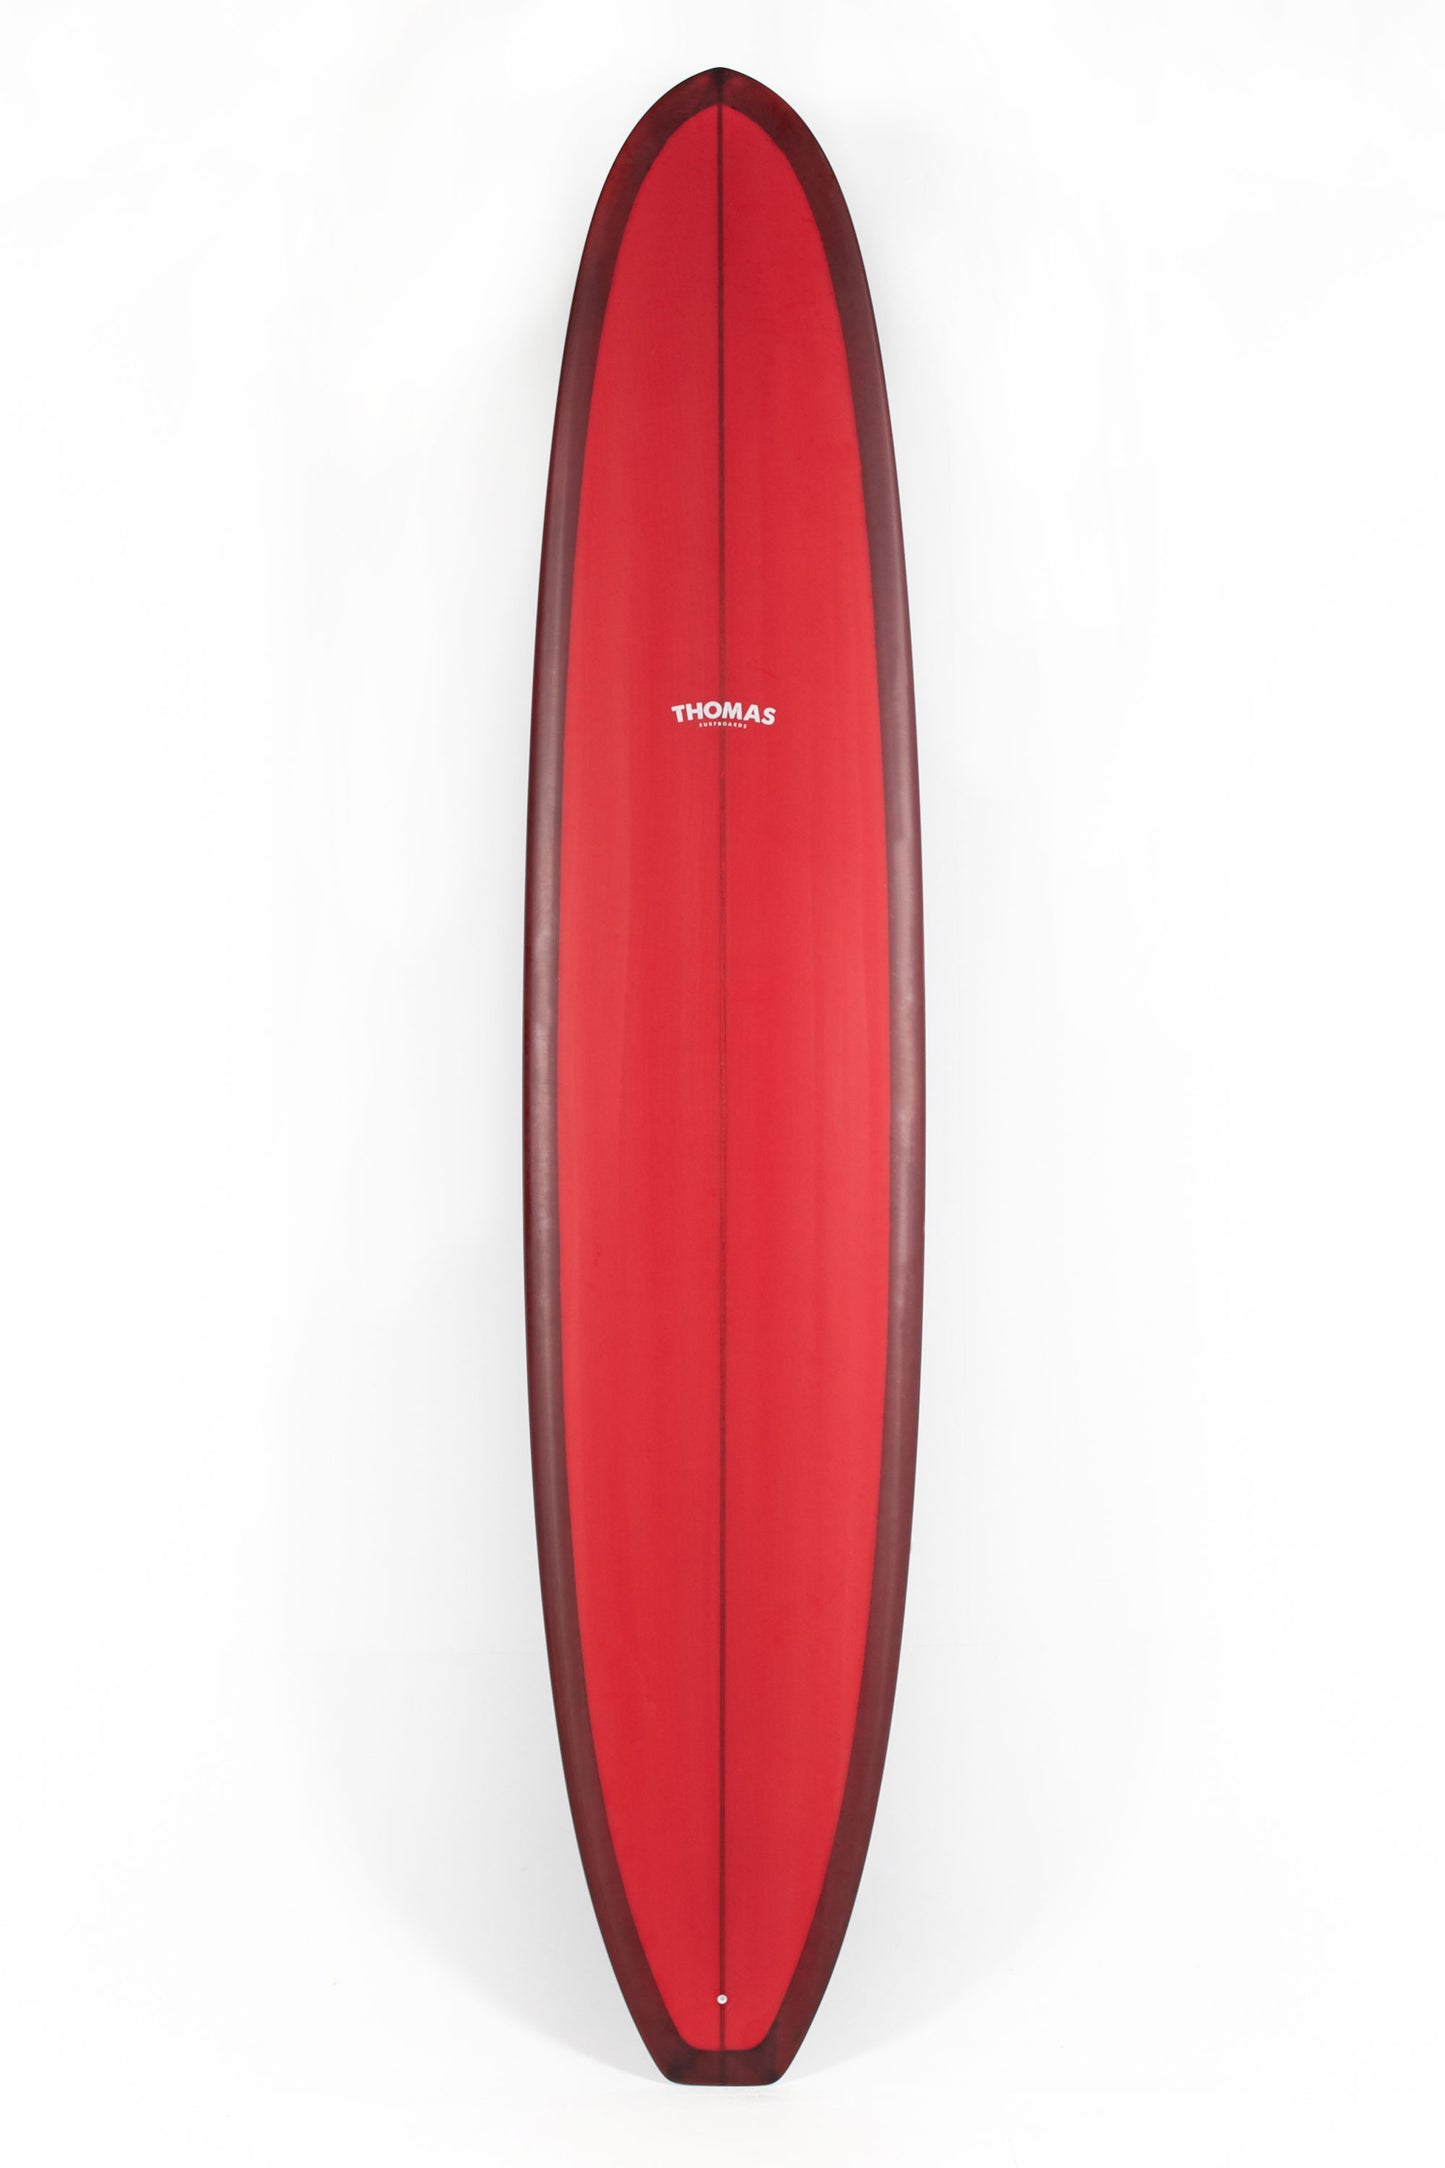 Pukas Surf Shop - Thomas Surfboards - HARRISON - 9'6" x 23 x 3 - THEHARRISON96